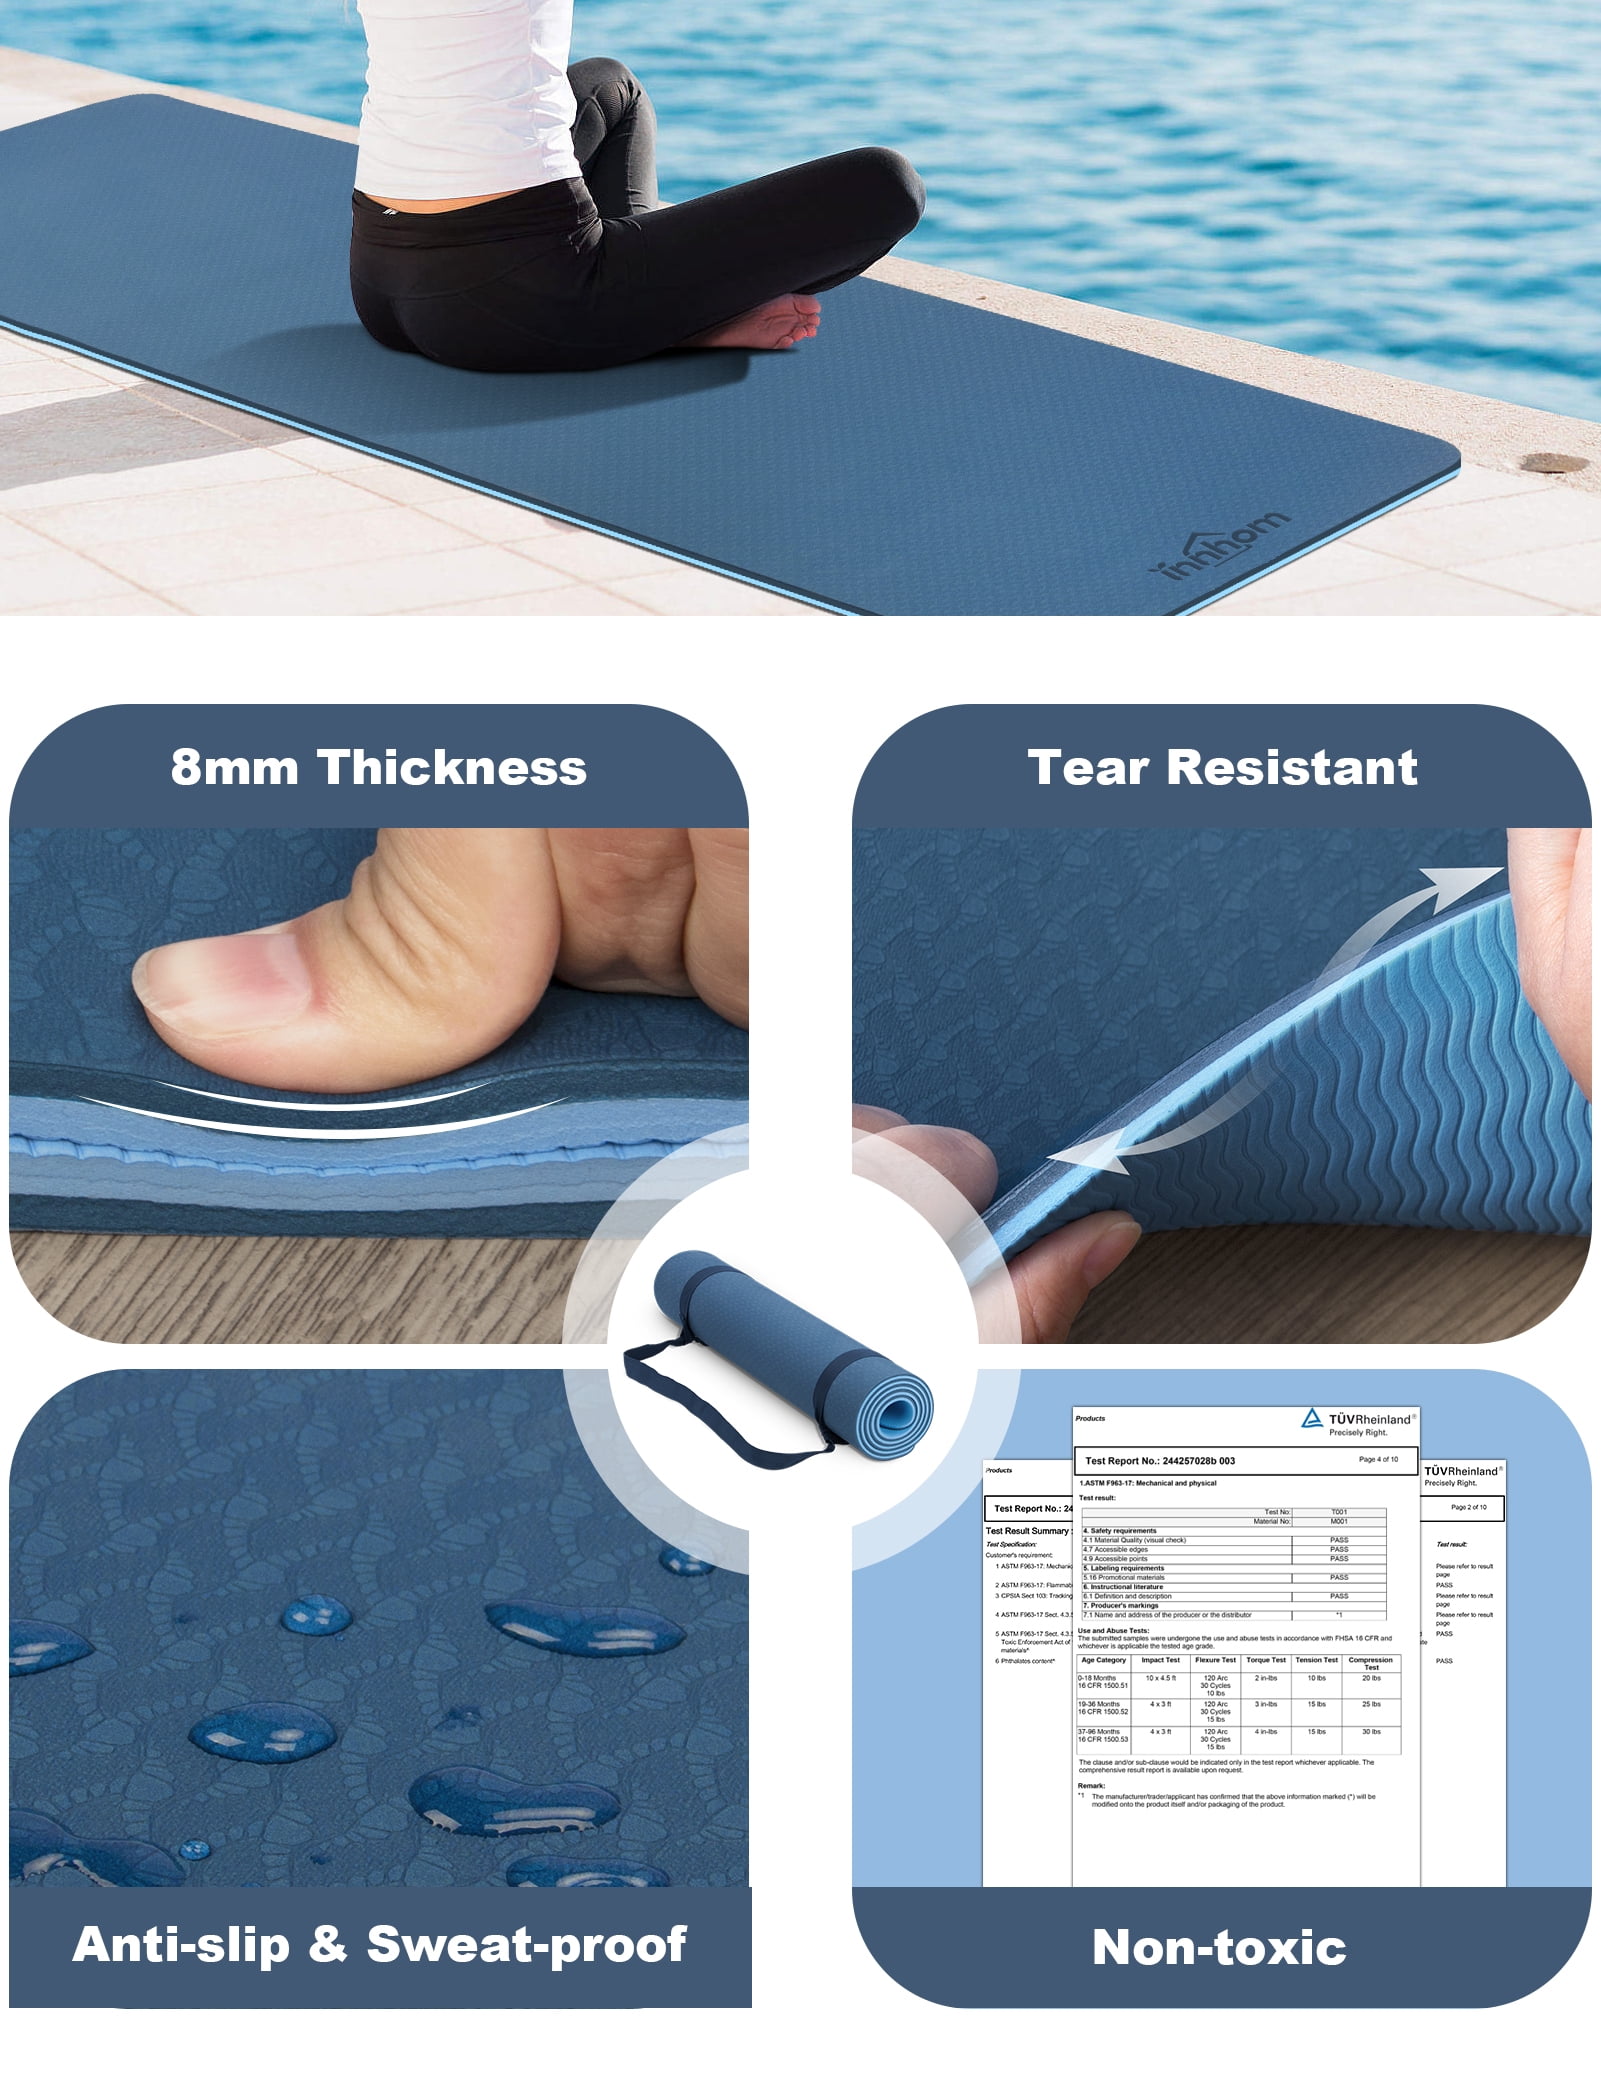 Yoga Mat innhom Yoga Mats for Women 1/3 inch Thick Yoga Mat for